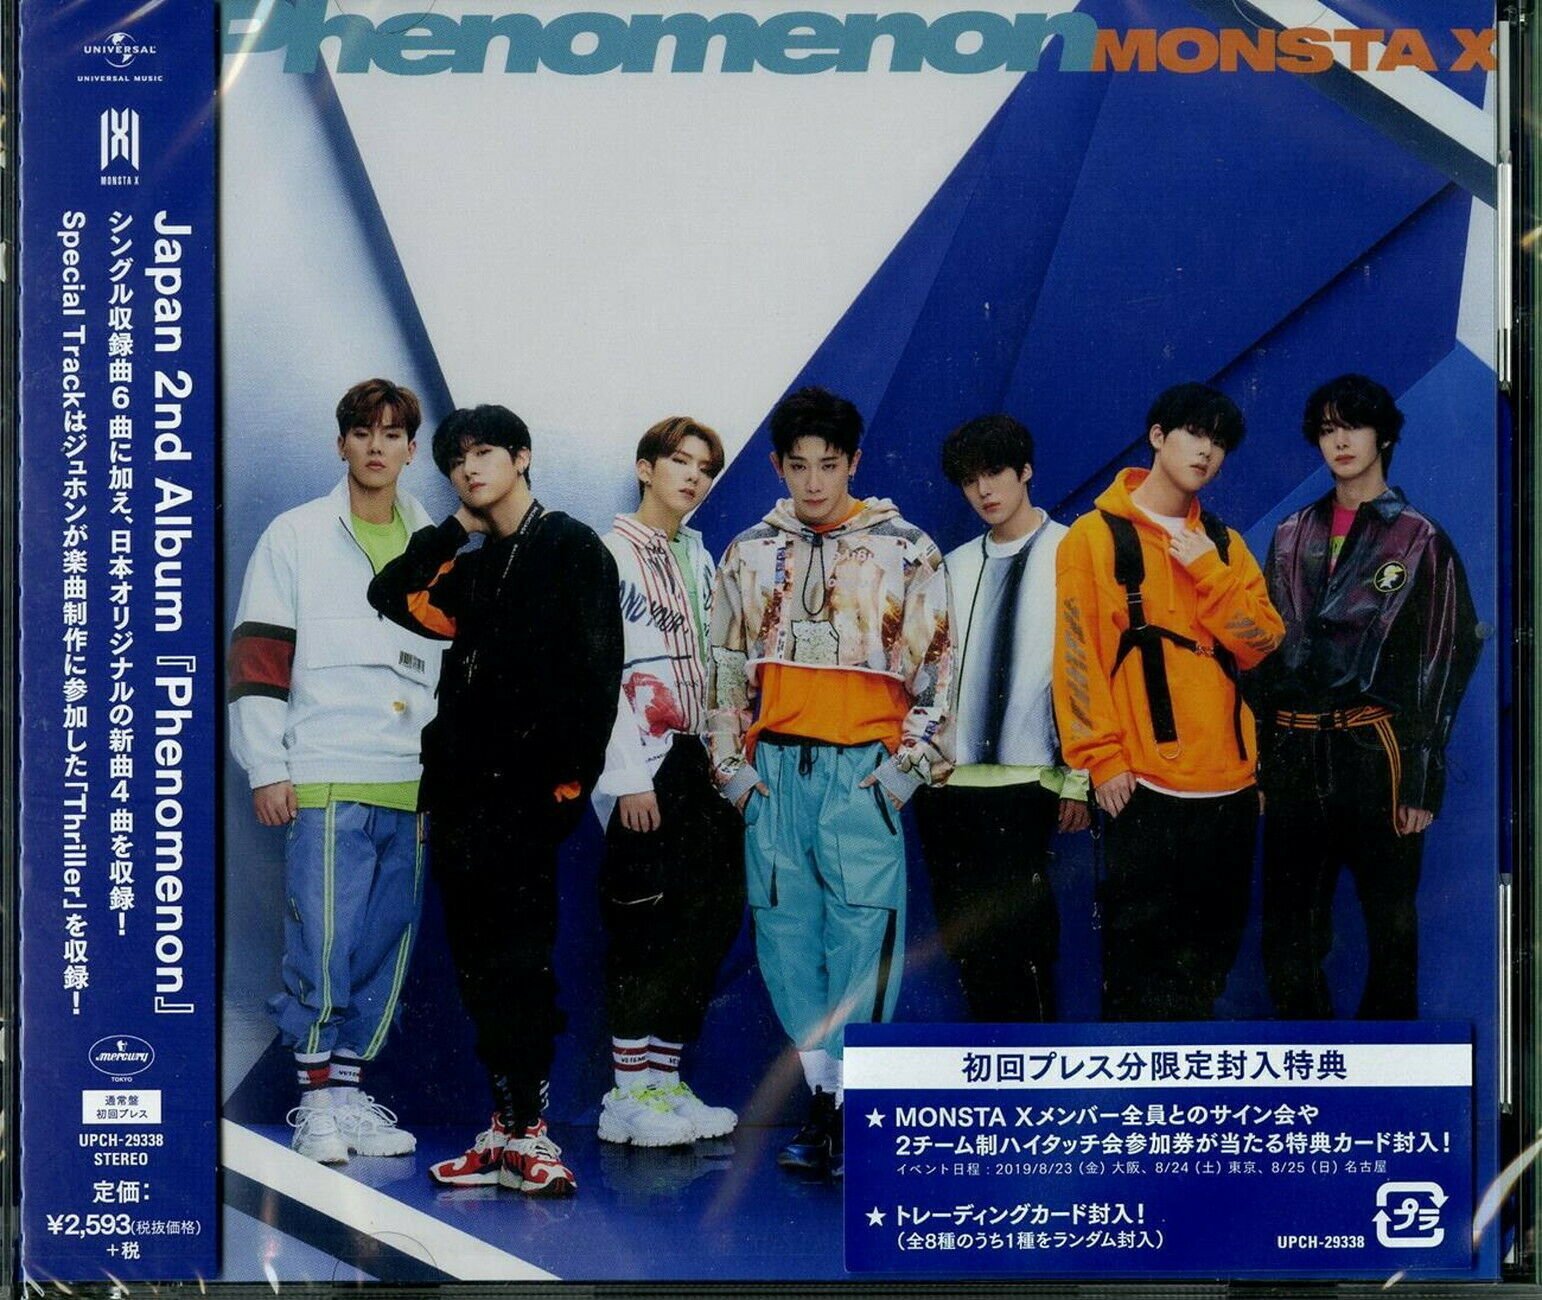 CD Shop - MONSTA X PHENOMENON